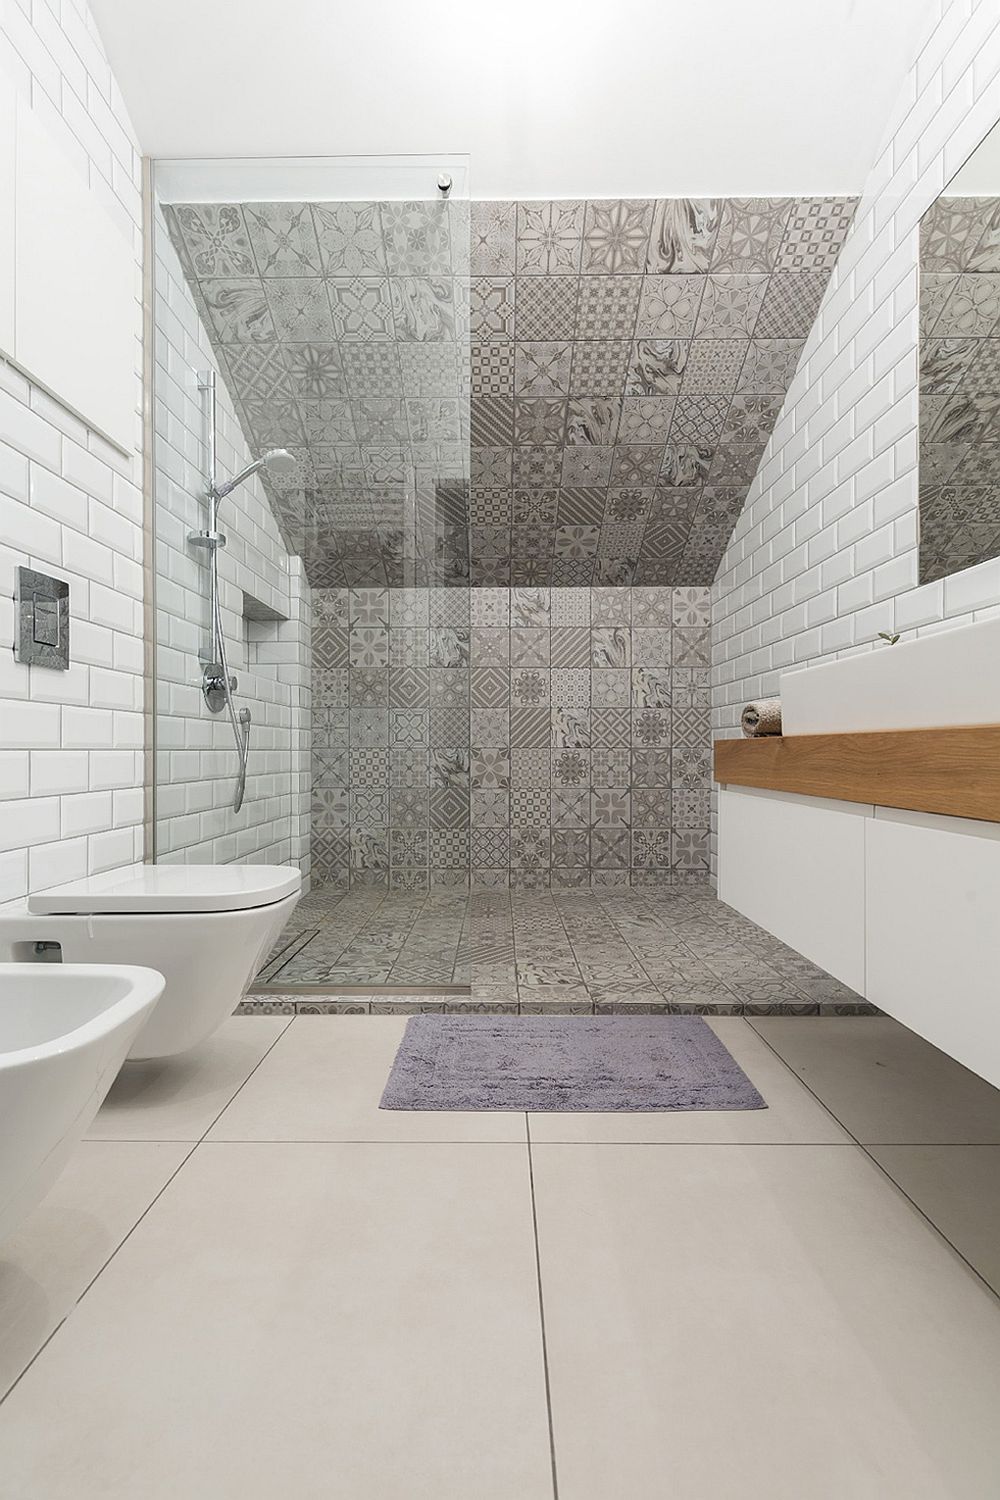 Tiles-define-the-shower-area-of-the-modern-bathroom